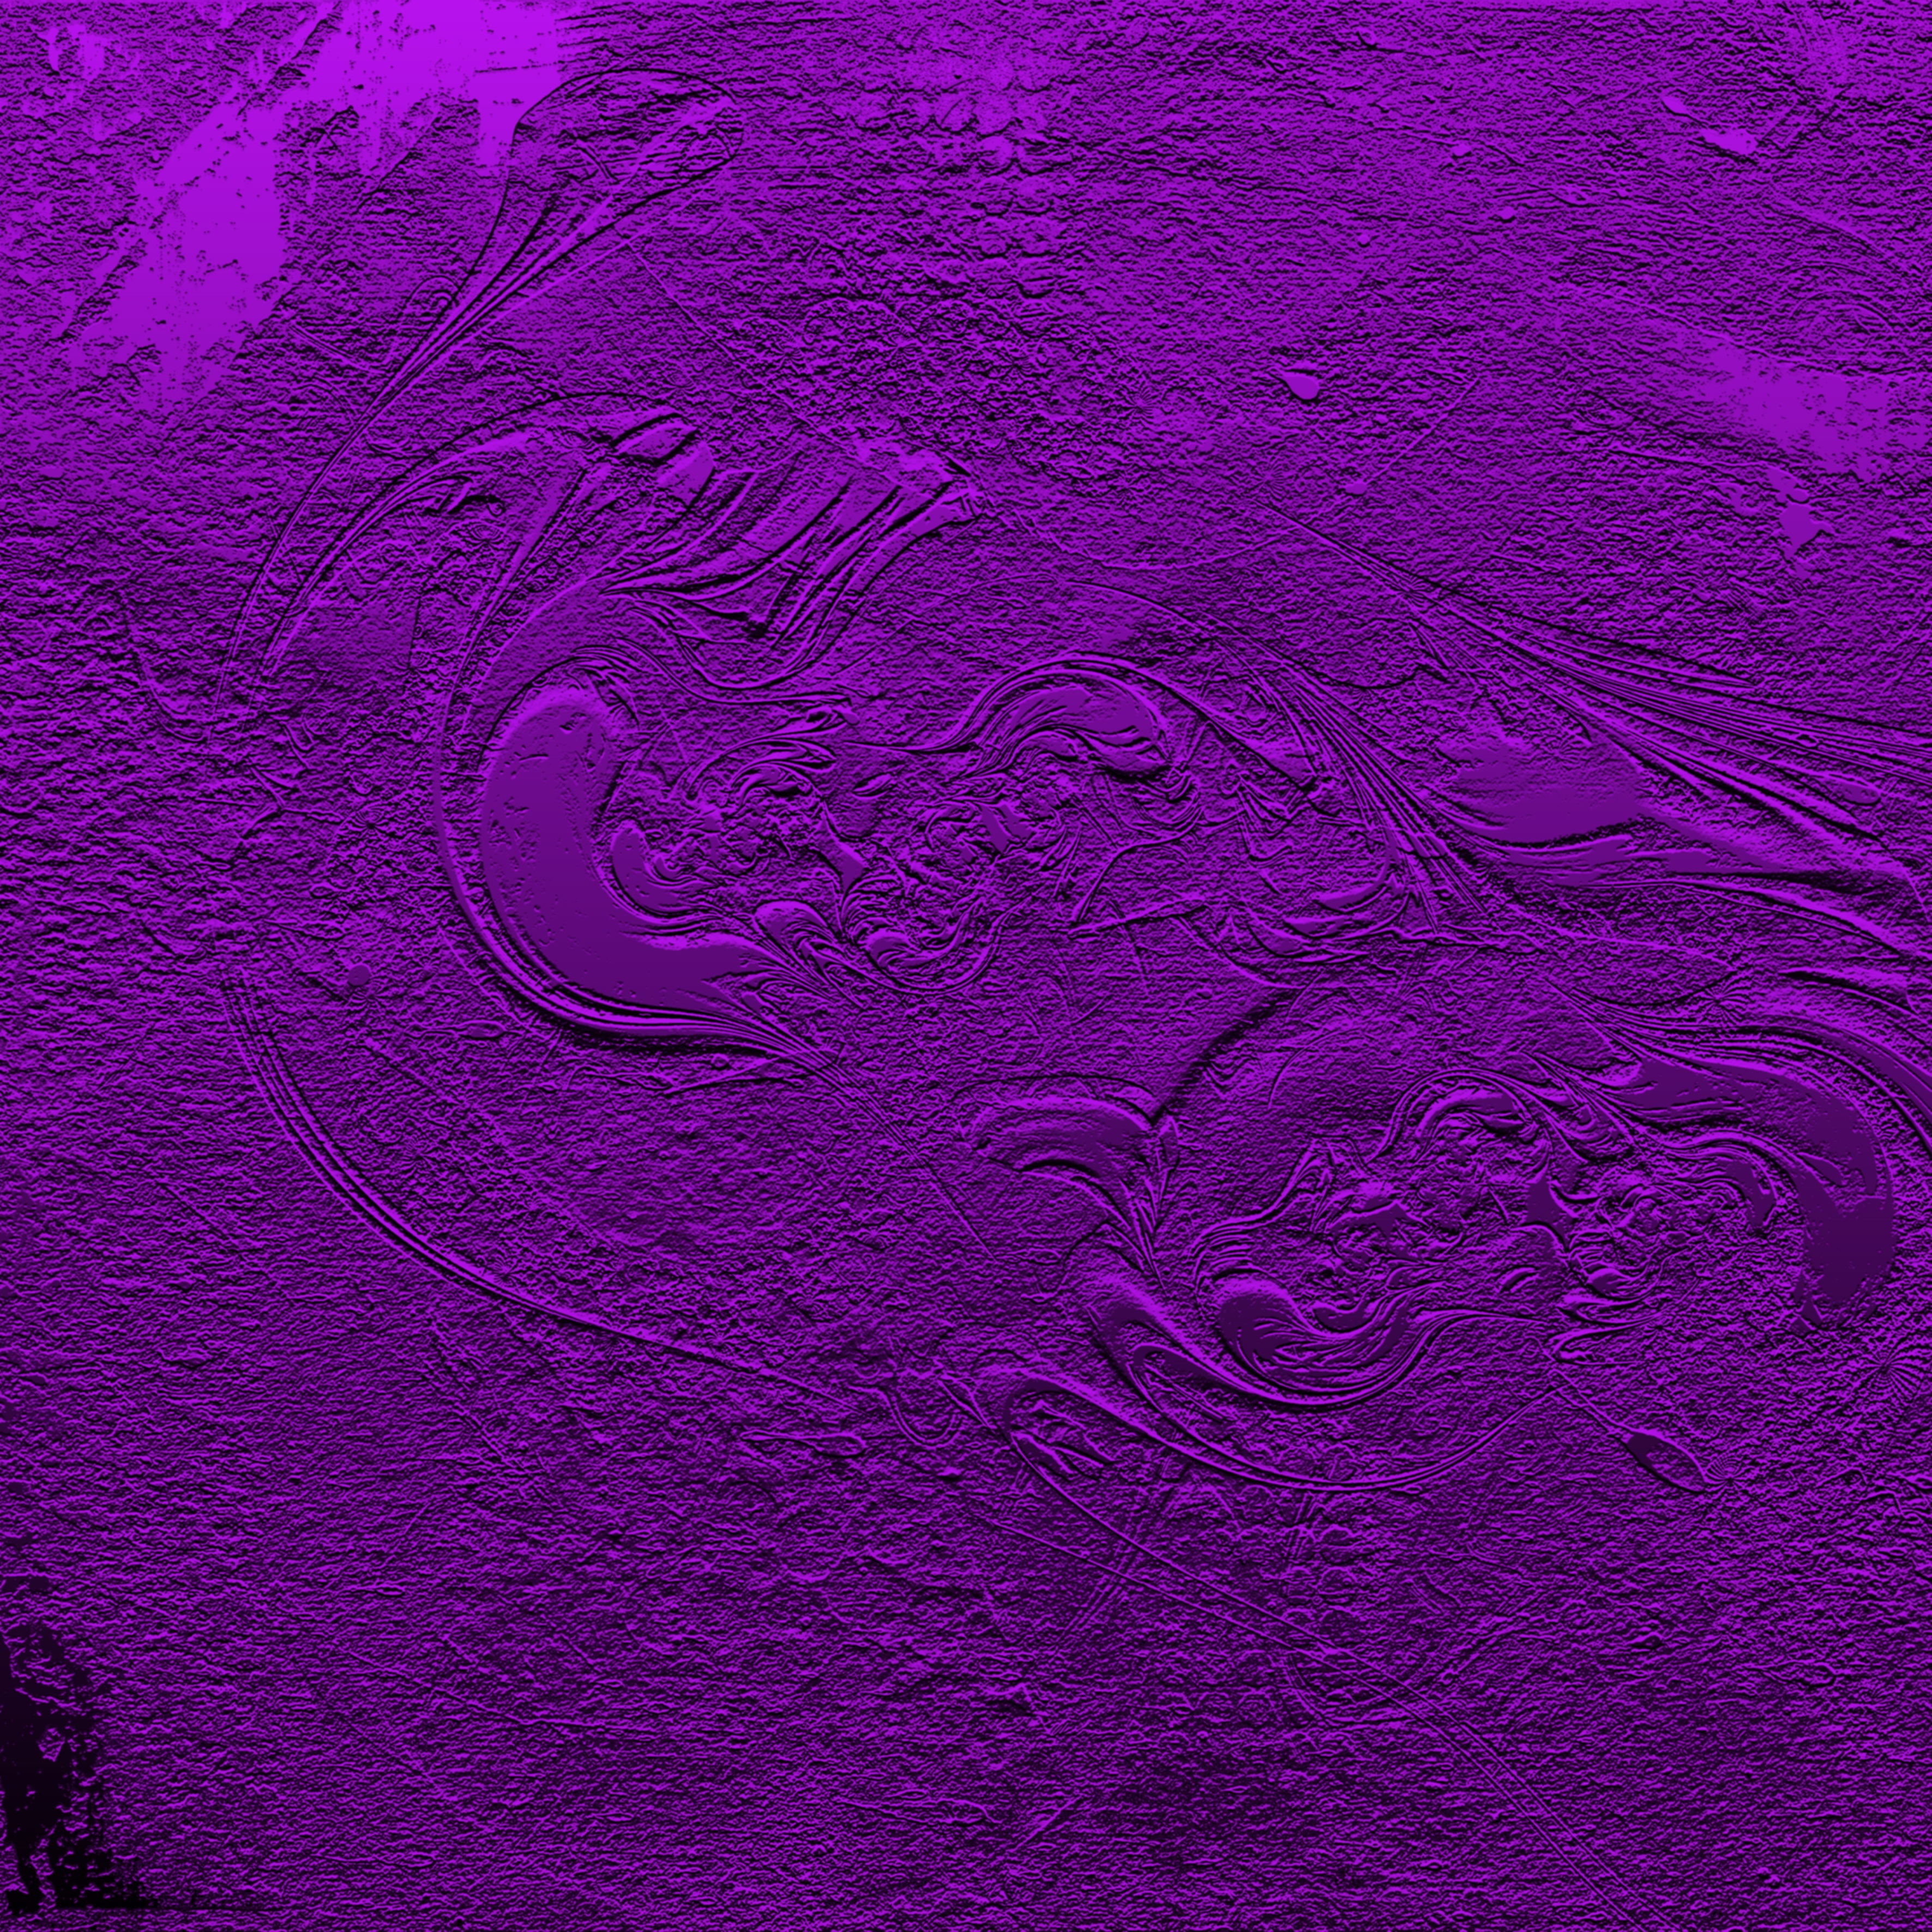 textures, violet, patterns, texture, irregularities, purple Aesthetic wallpaper